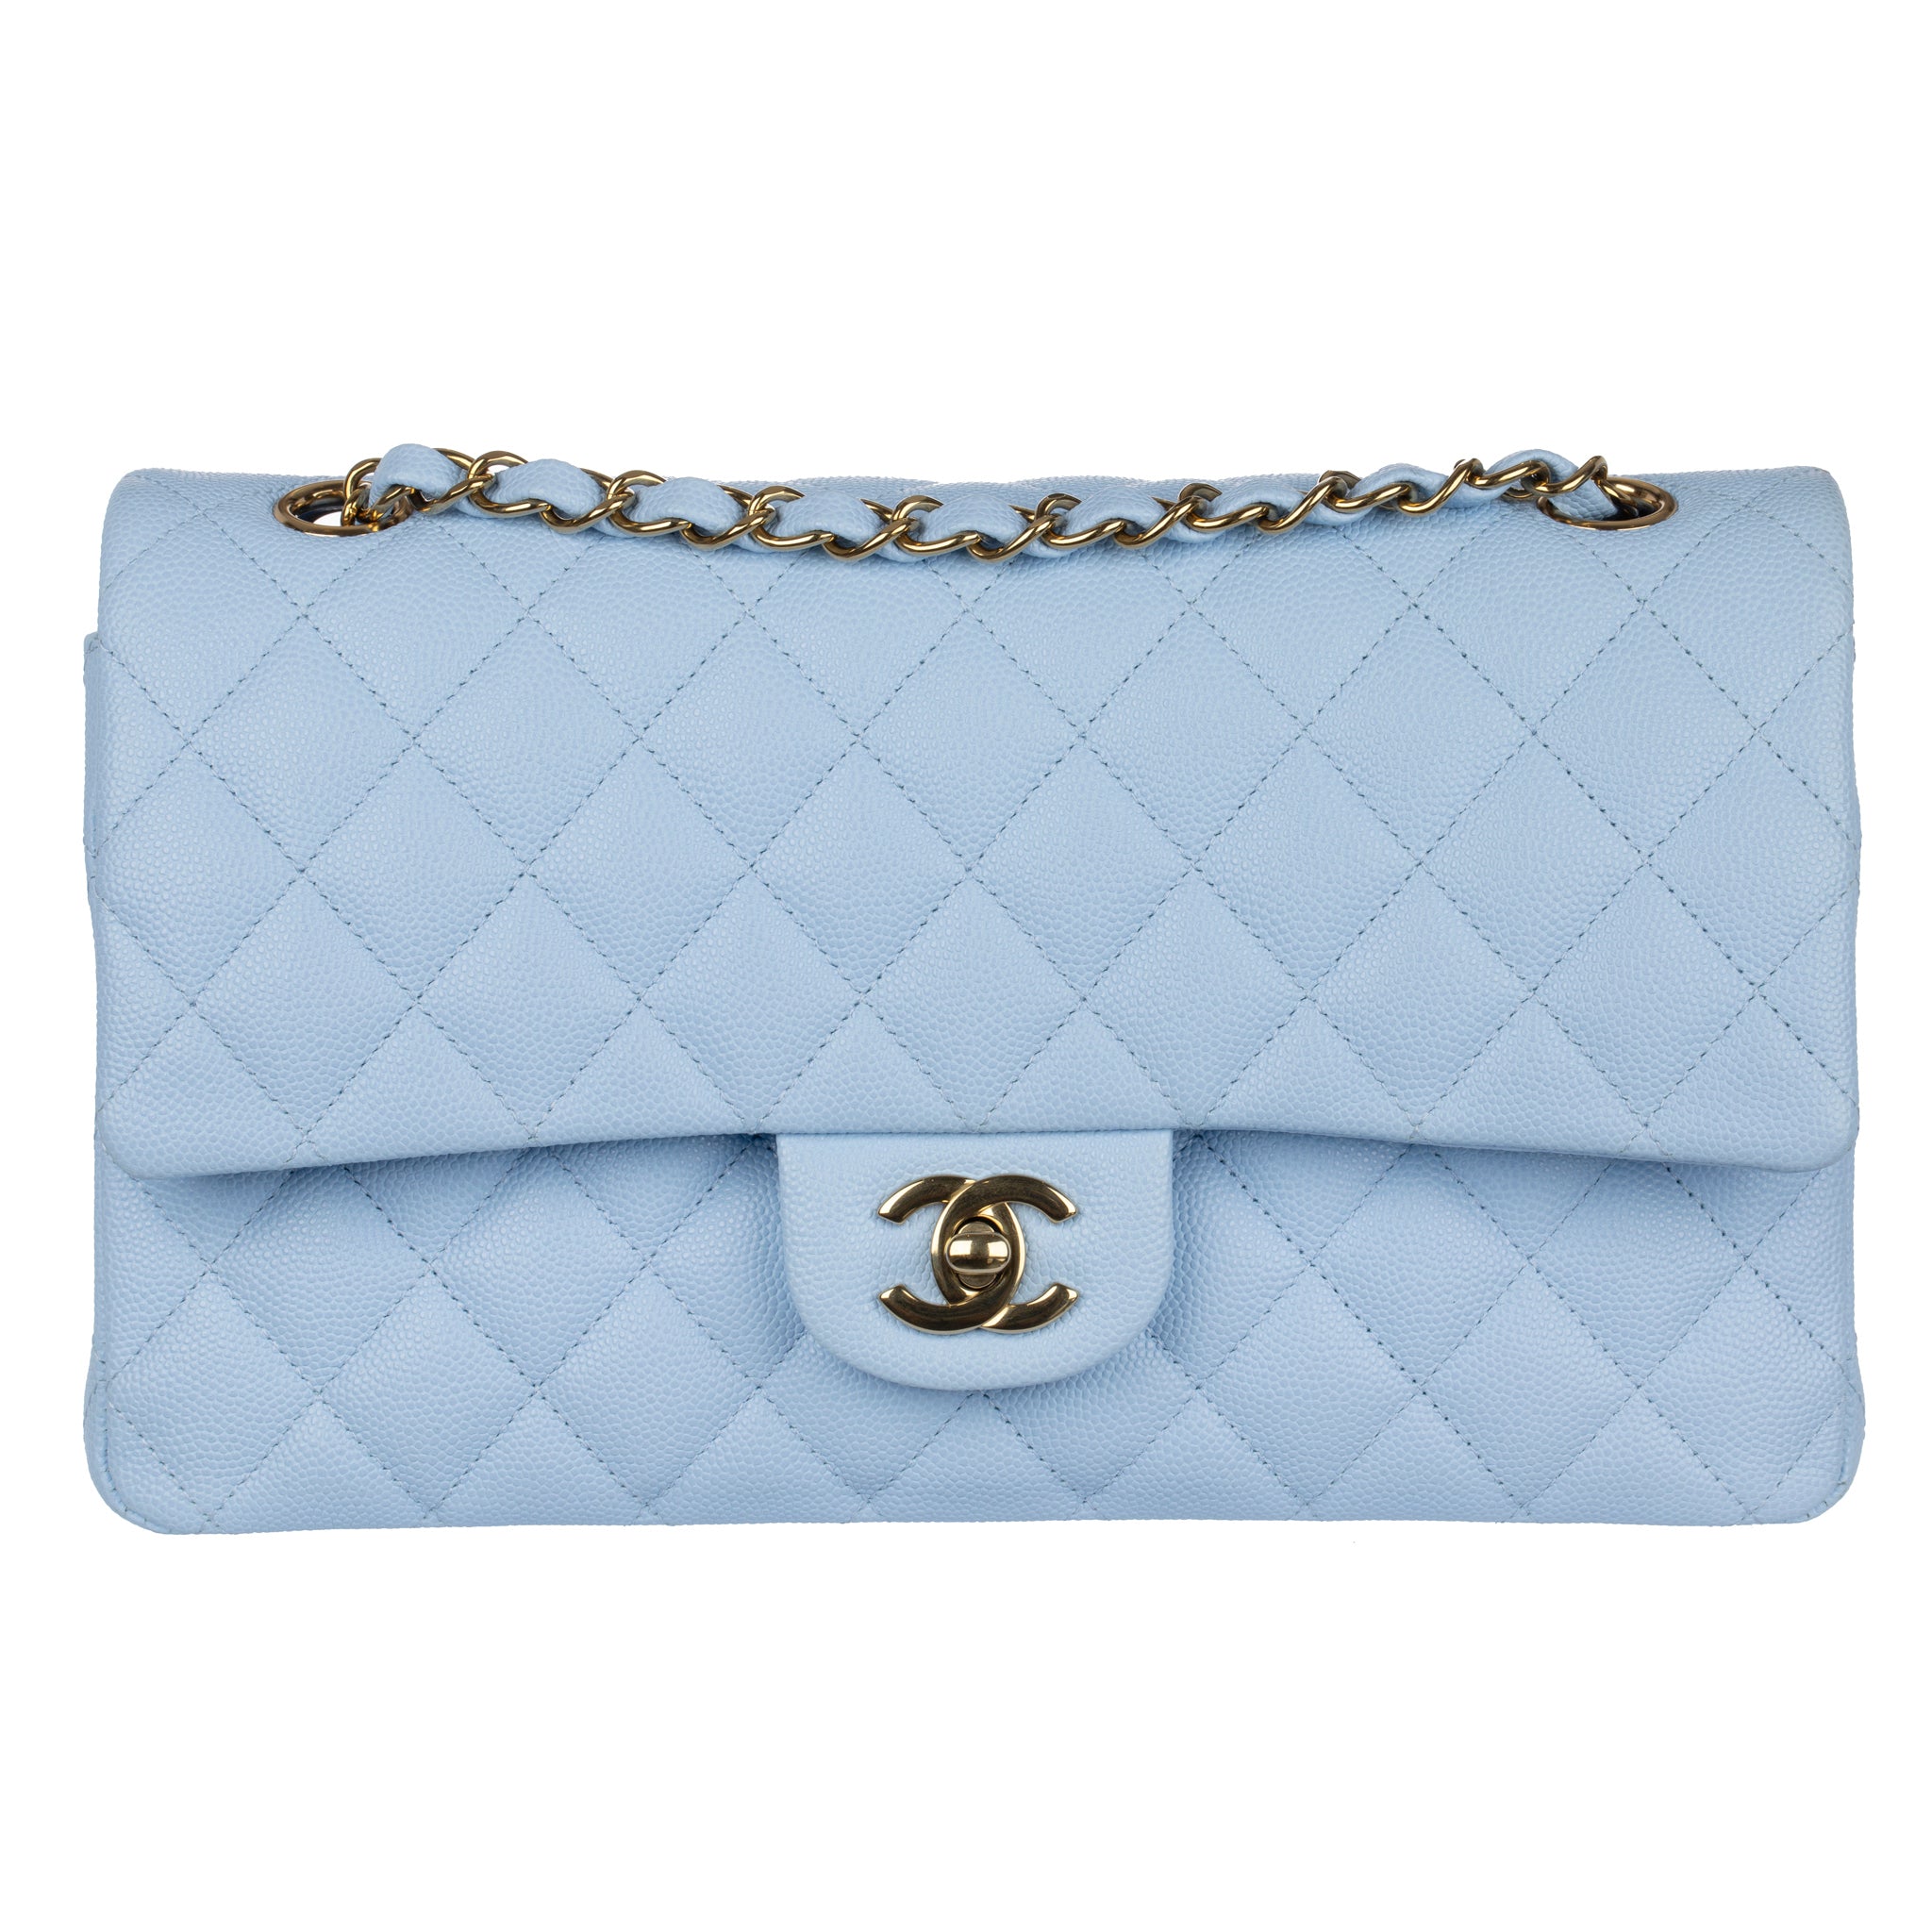 Chanel Medium Double Classic Flap Bag Pale Blue Caviar Leather Gold Tone Hardware